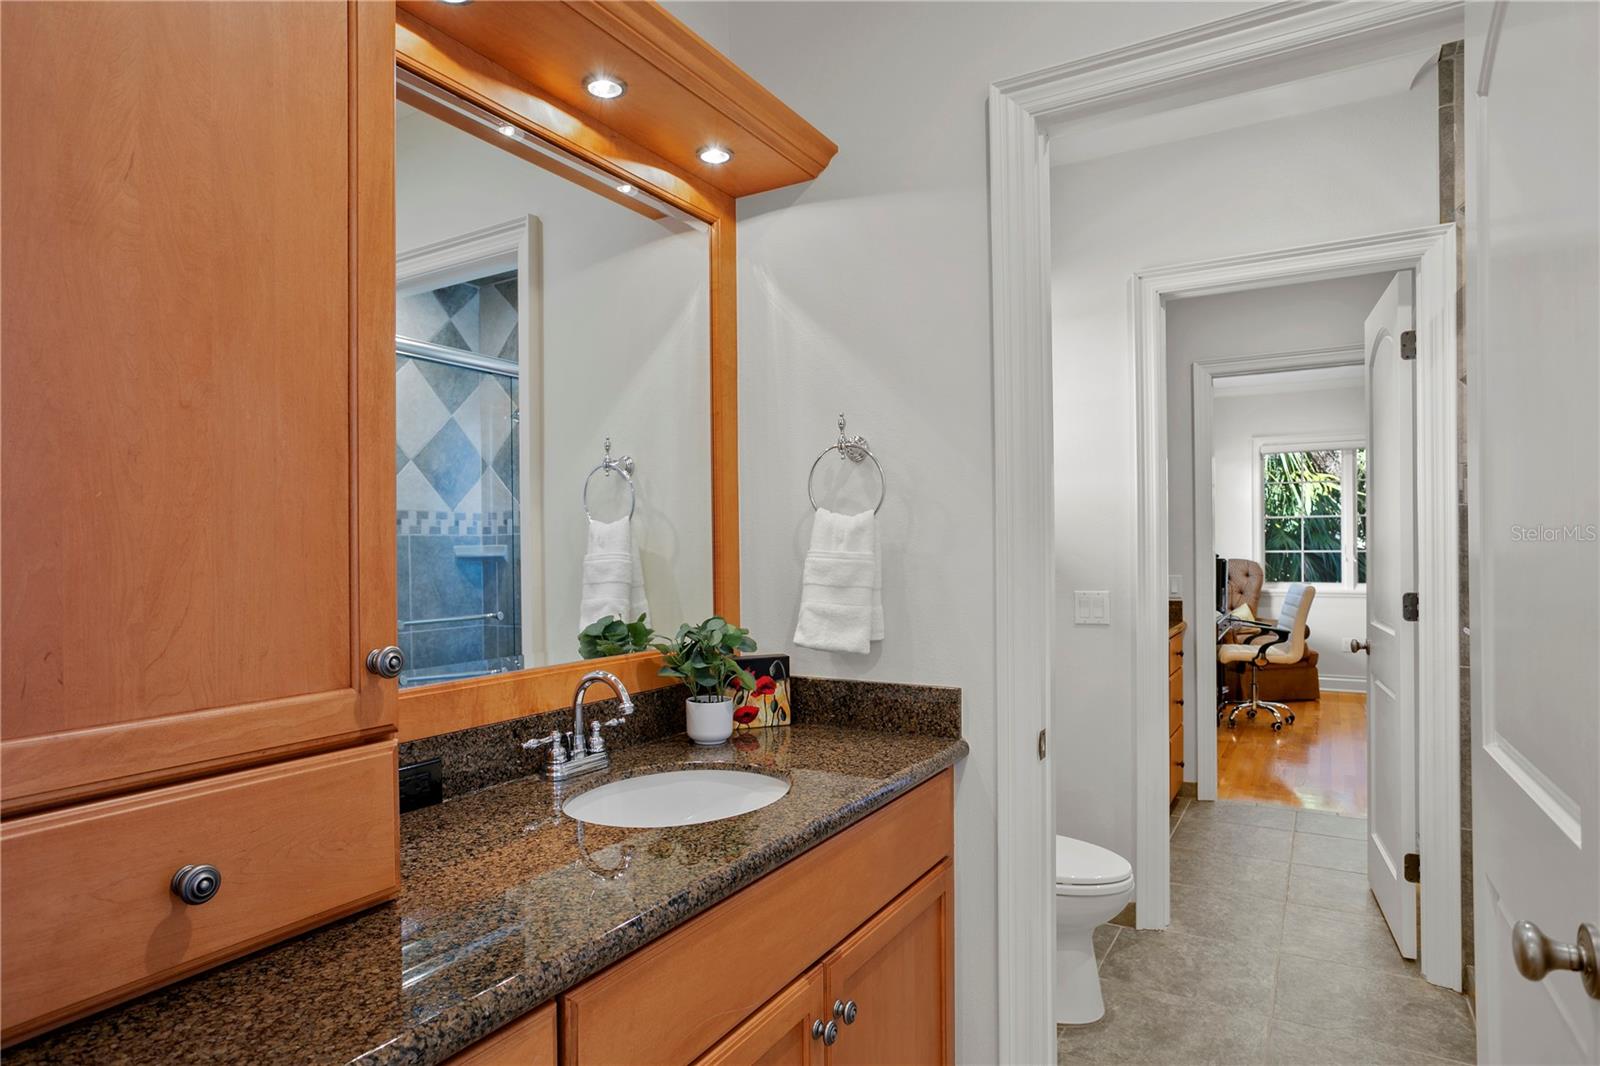 Dual sink vanities for jack and jill bathrooms located between bedrooms 4 and 5.